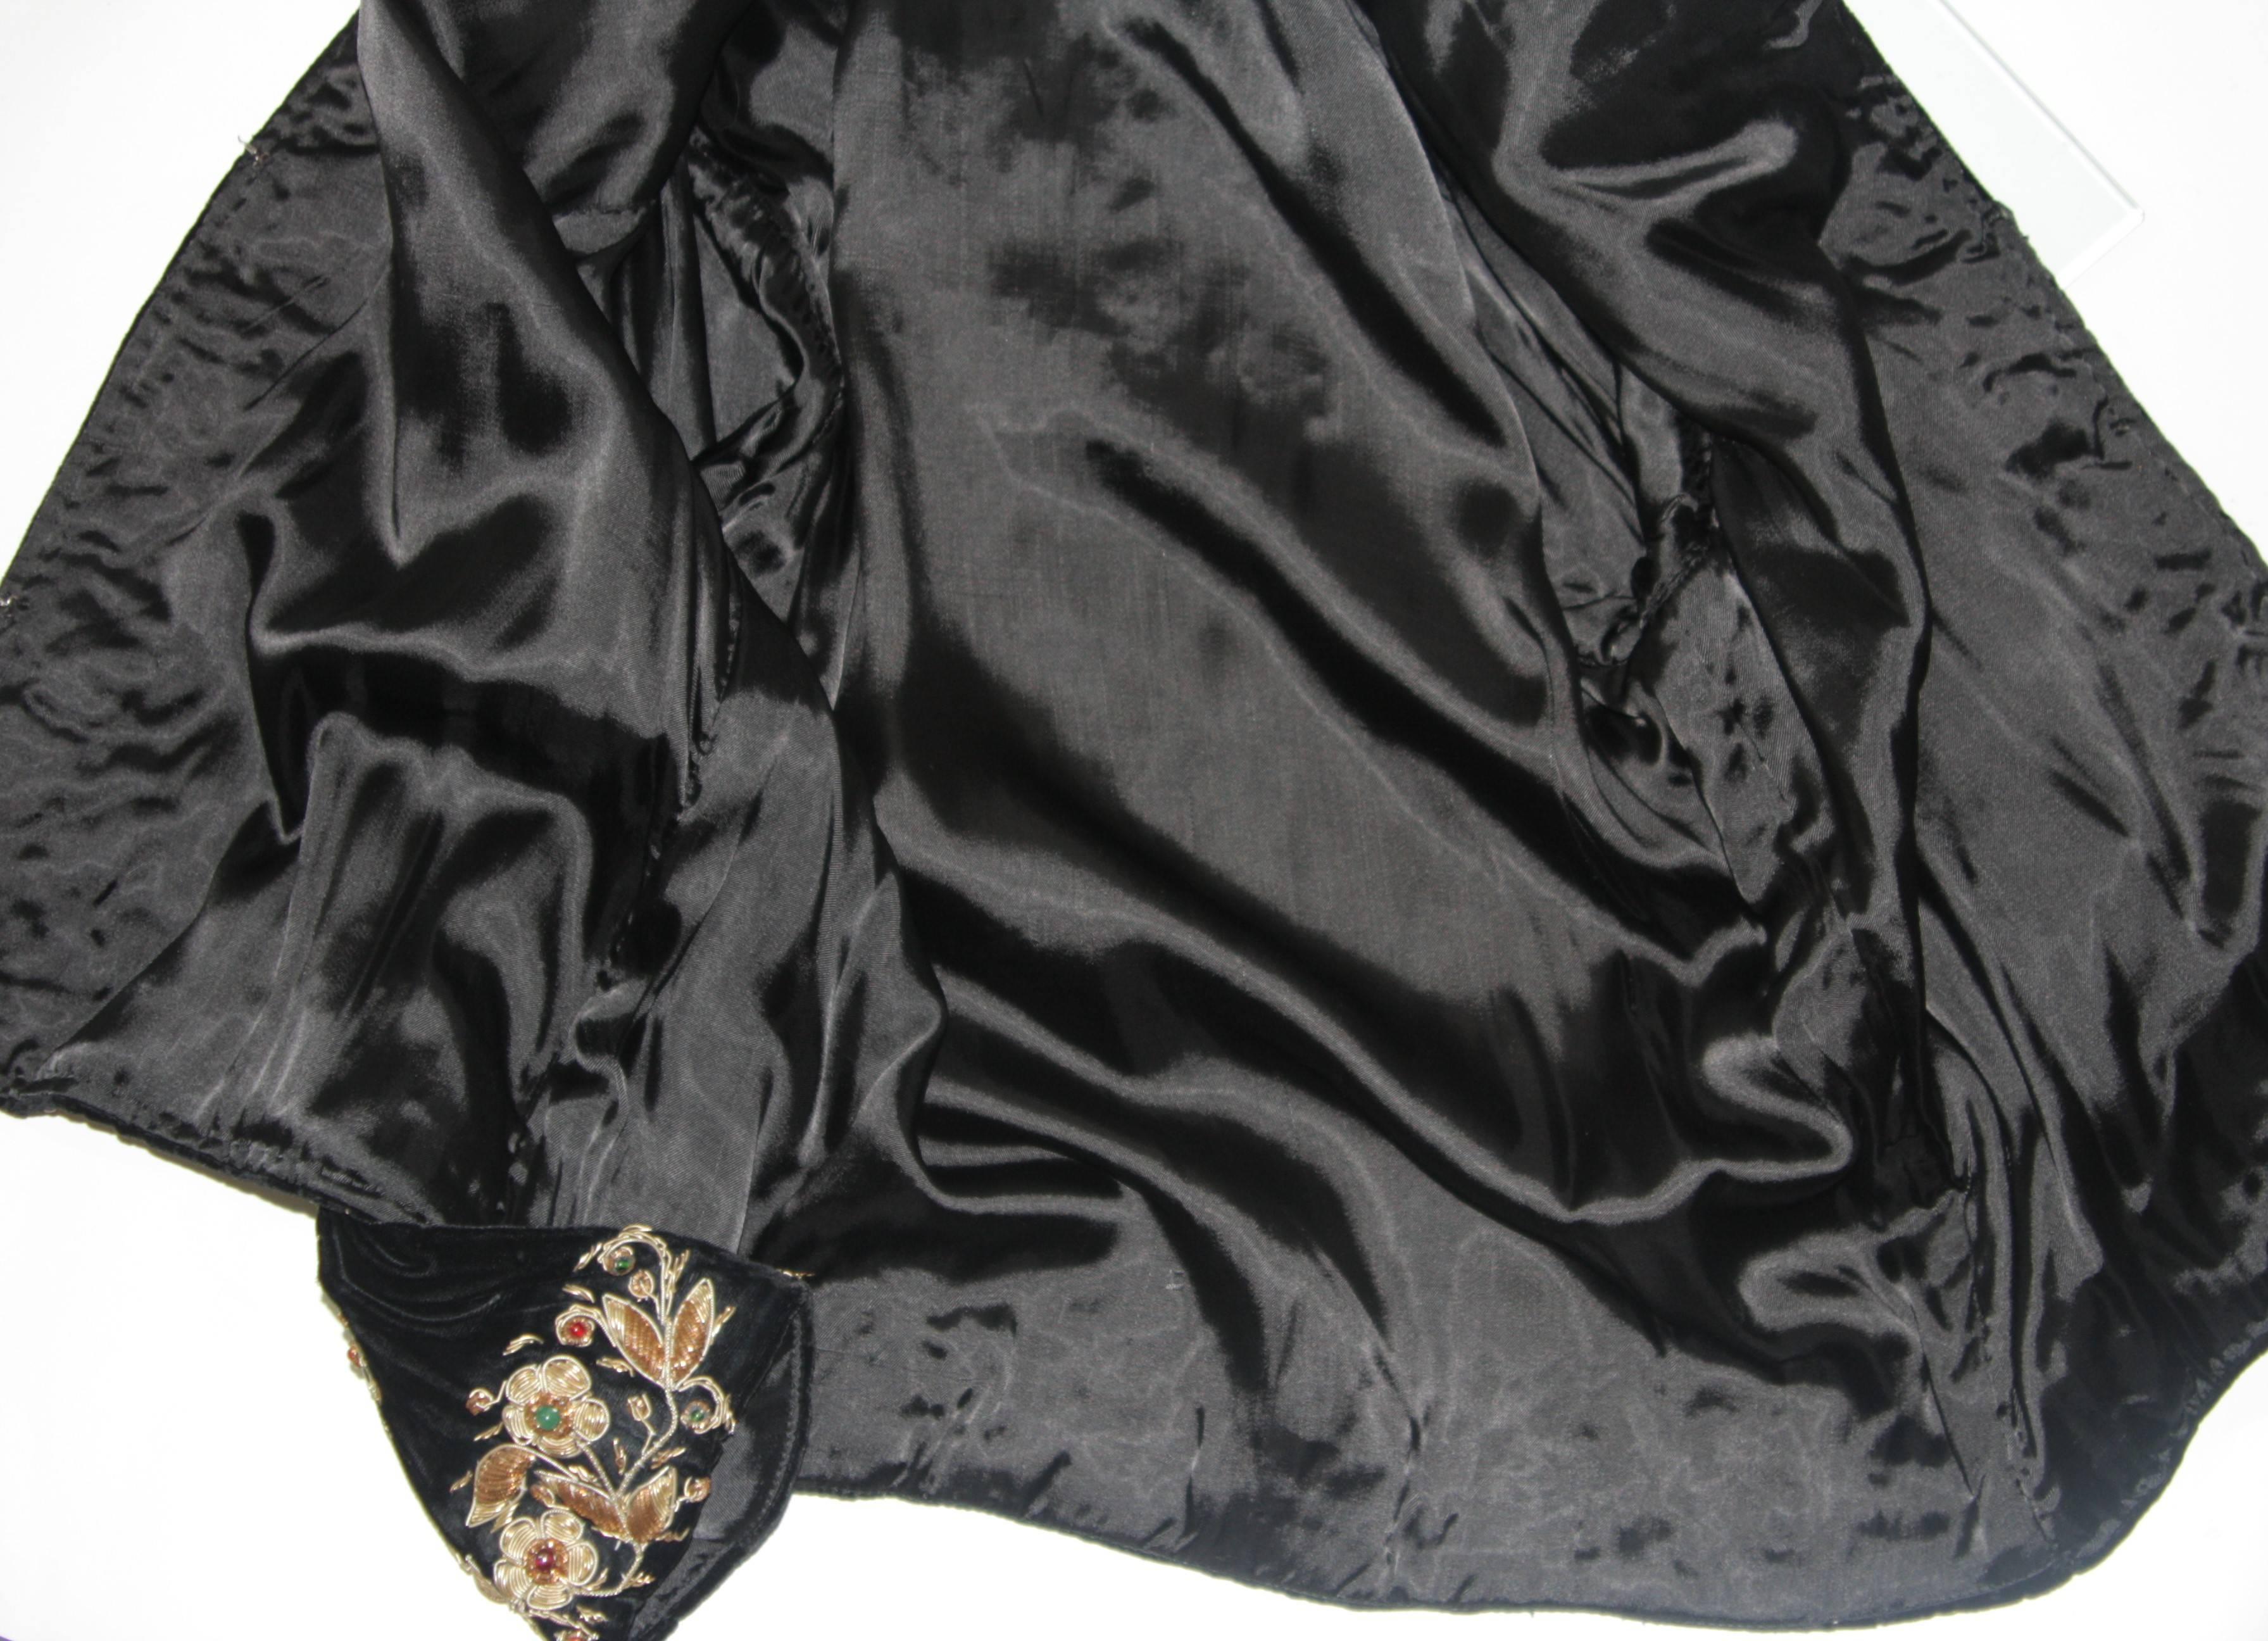 Velvet Jacket with Metallic Embroidery and Embellishment Size Small Medium Large 4